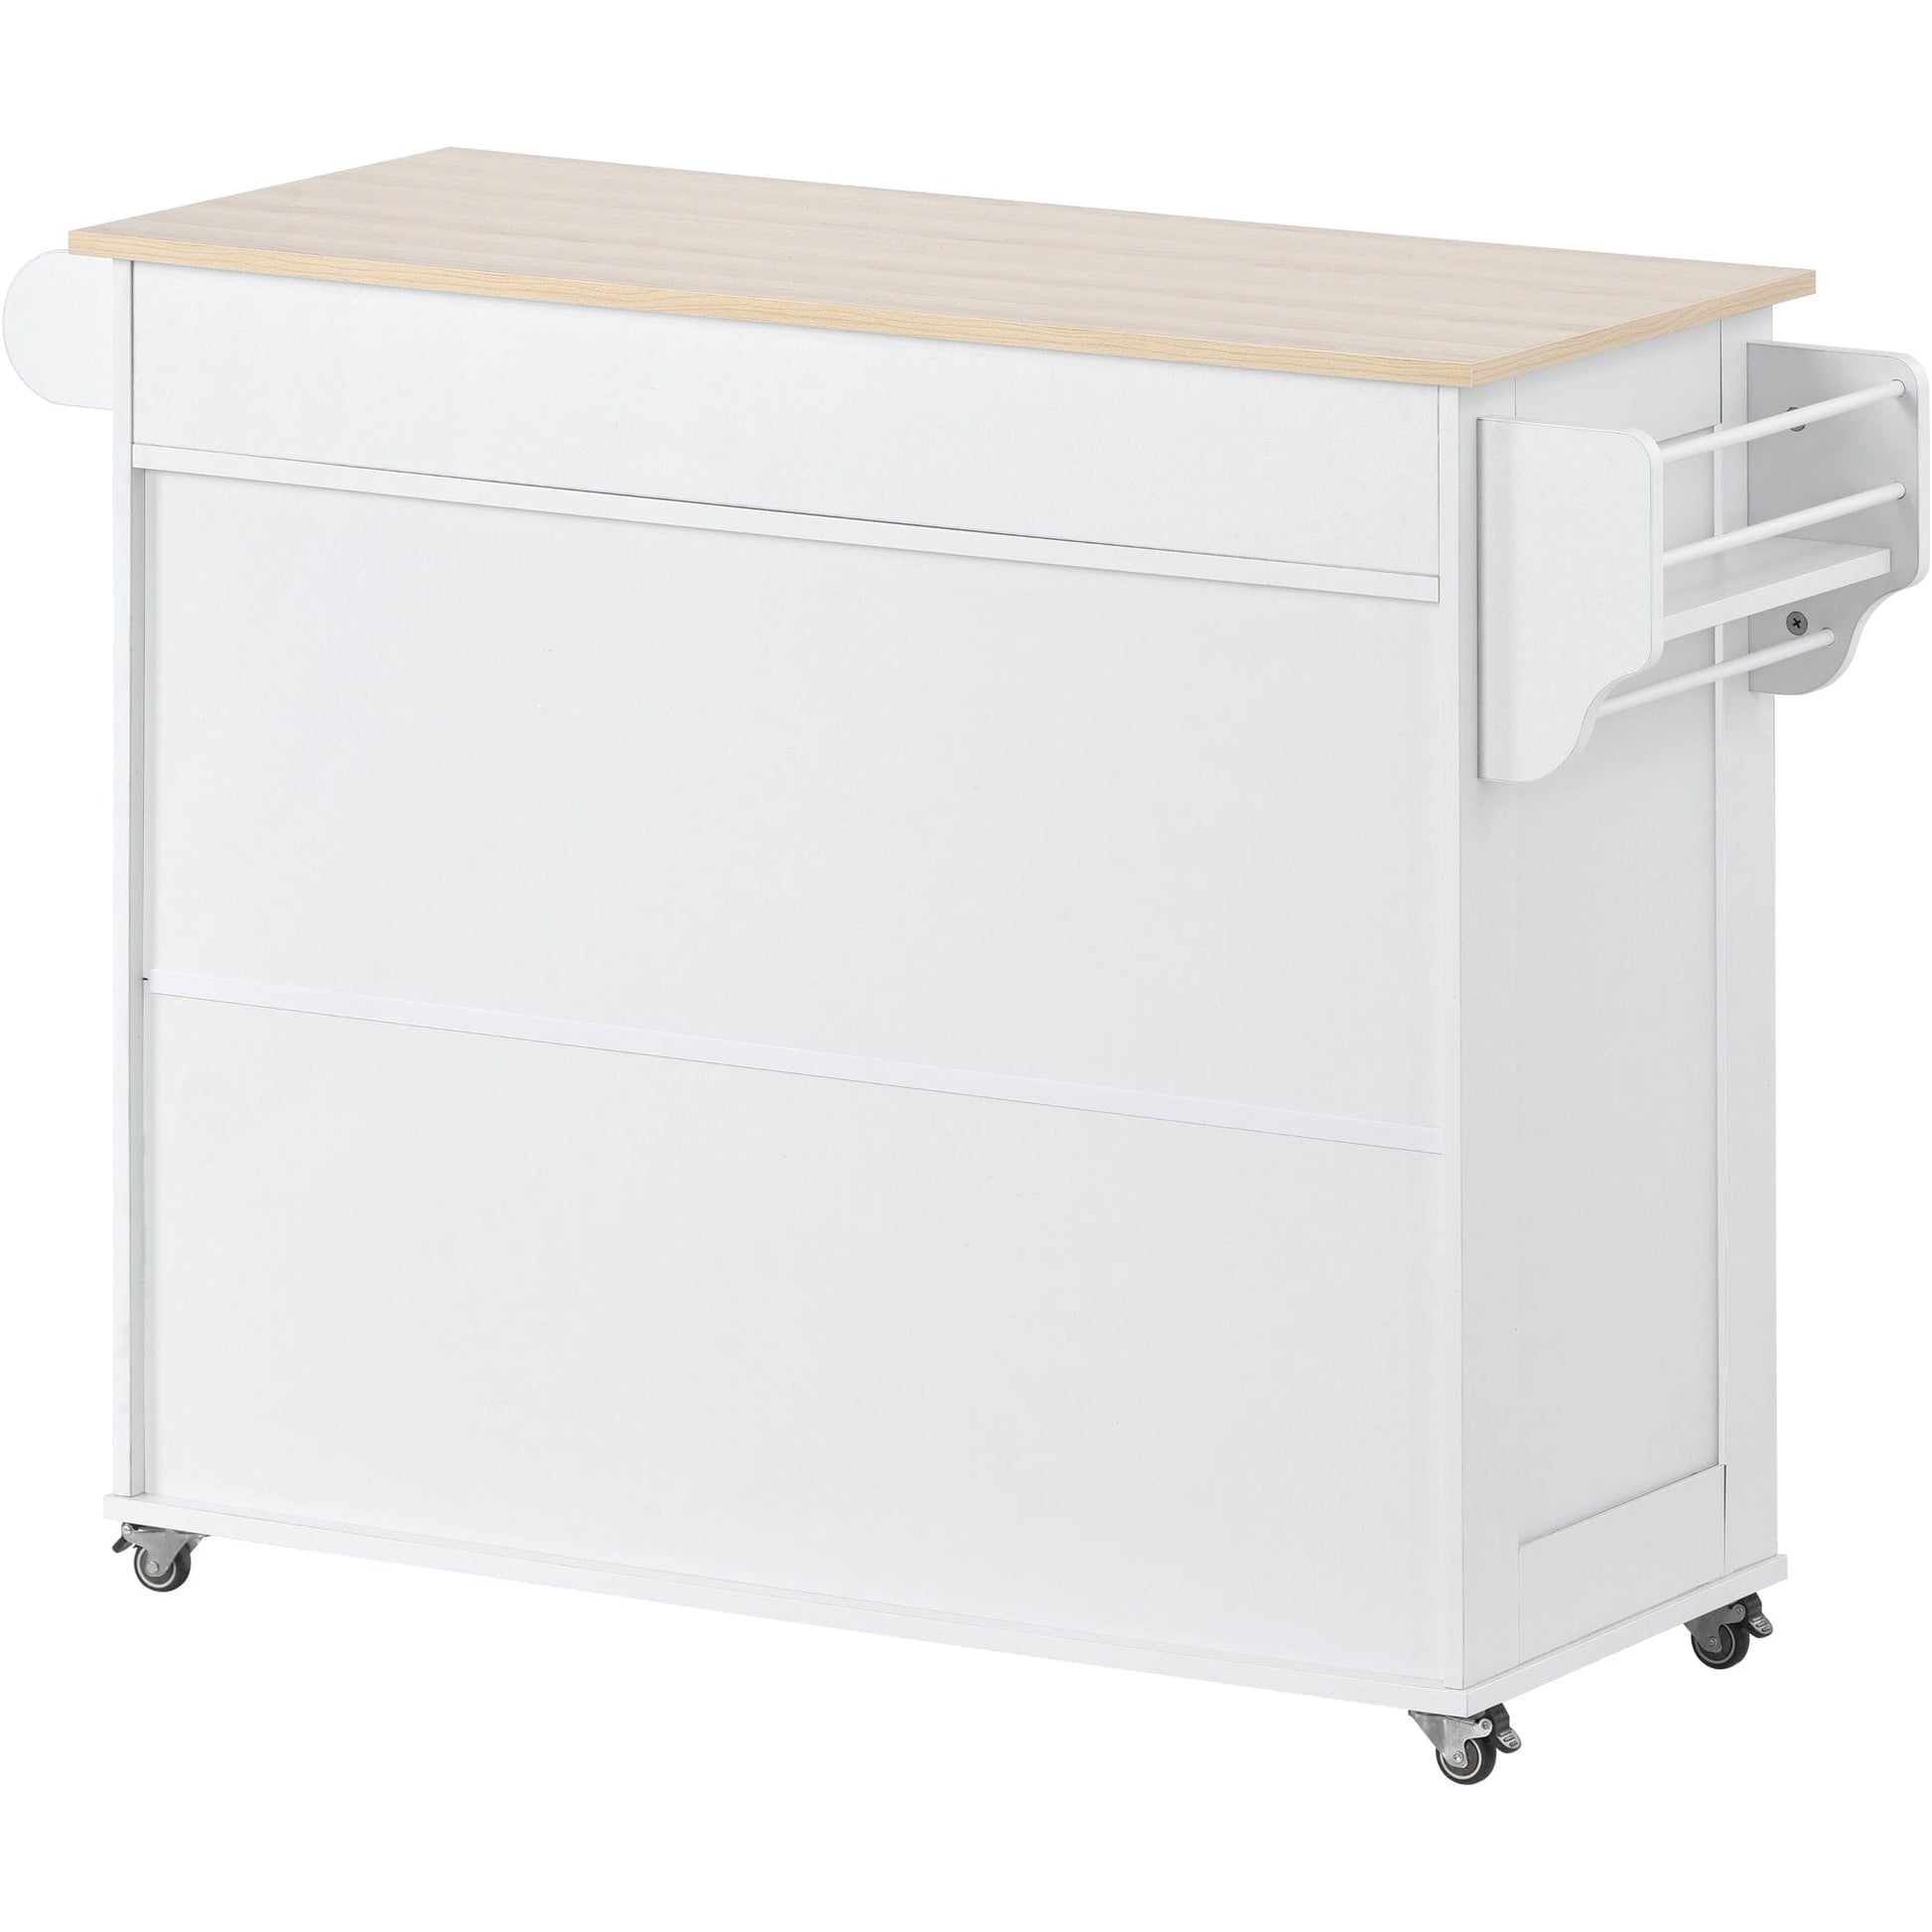 1st Choice Furniture Direct Kitchen Island Cart 1st Choice Functional and Chic White Island Cart with Multiple Storage